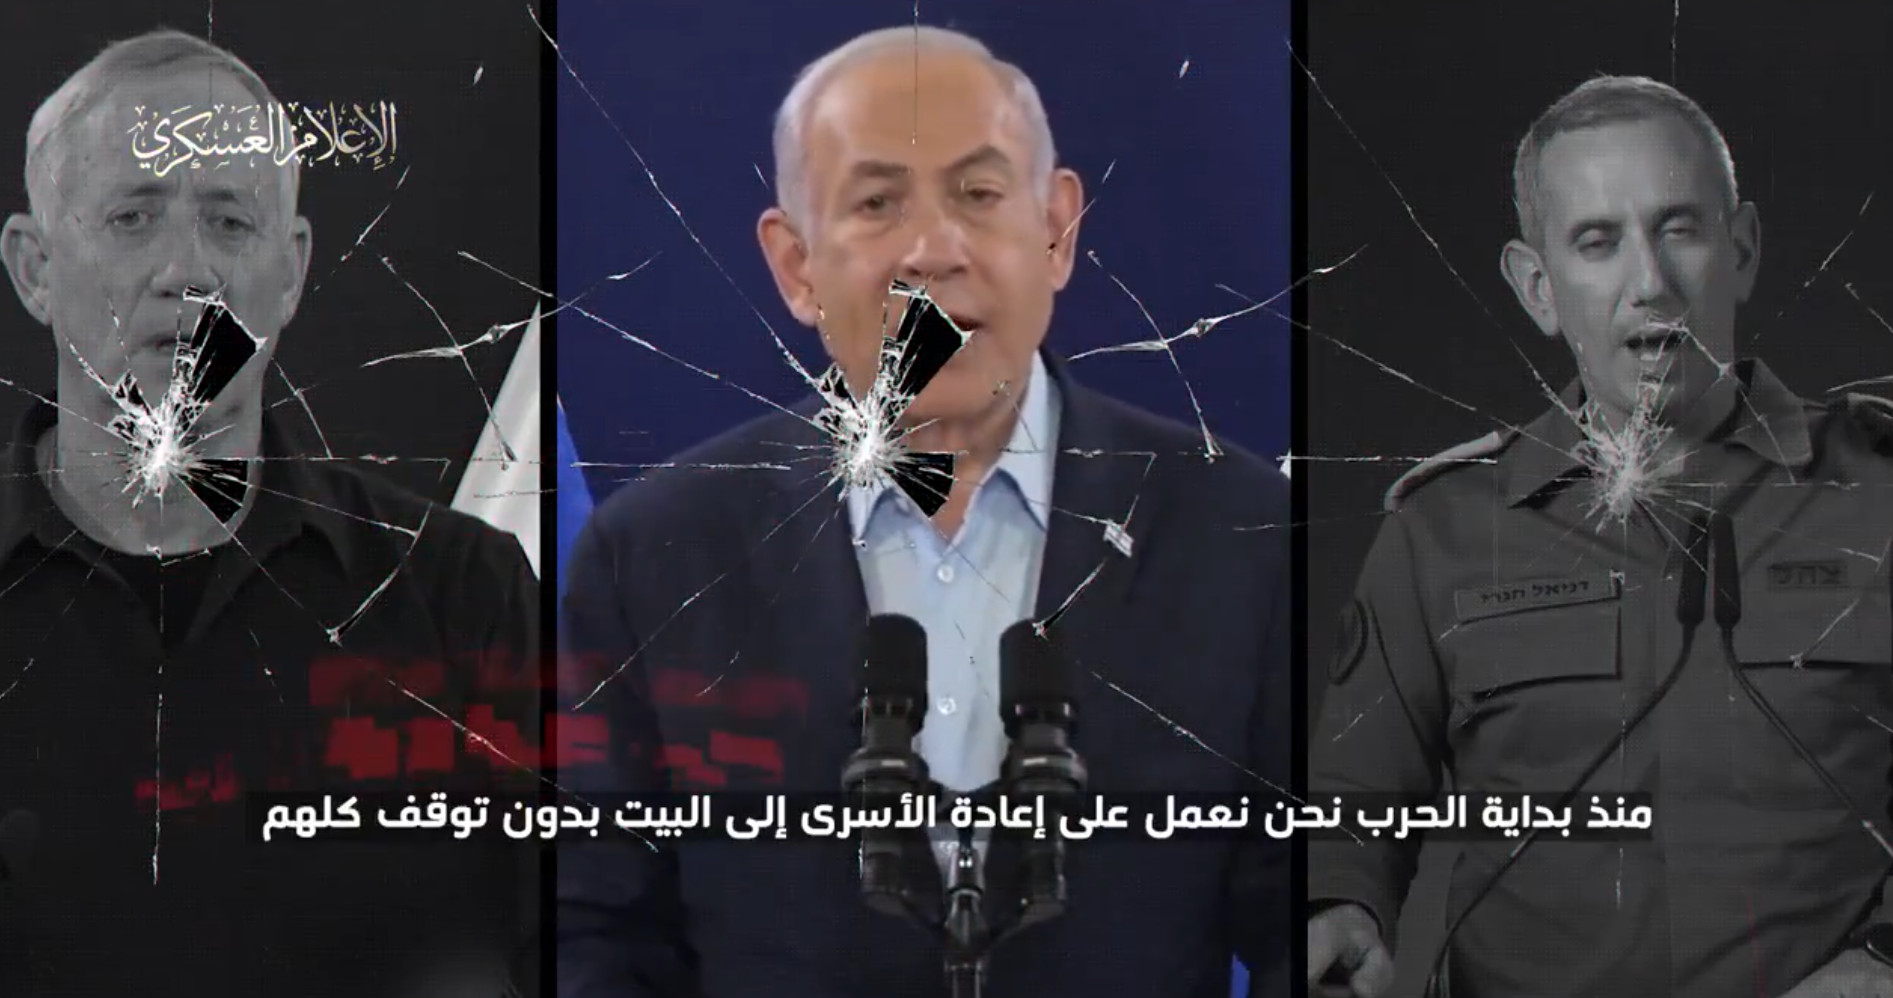 Live: Νέο βίντεο της Χαμάς με νεκρούς ομήρους - «Έτσι θα τους φέρουν πίσω», λέει κατηγορώντας τον Νετανιάχου